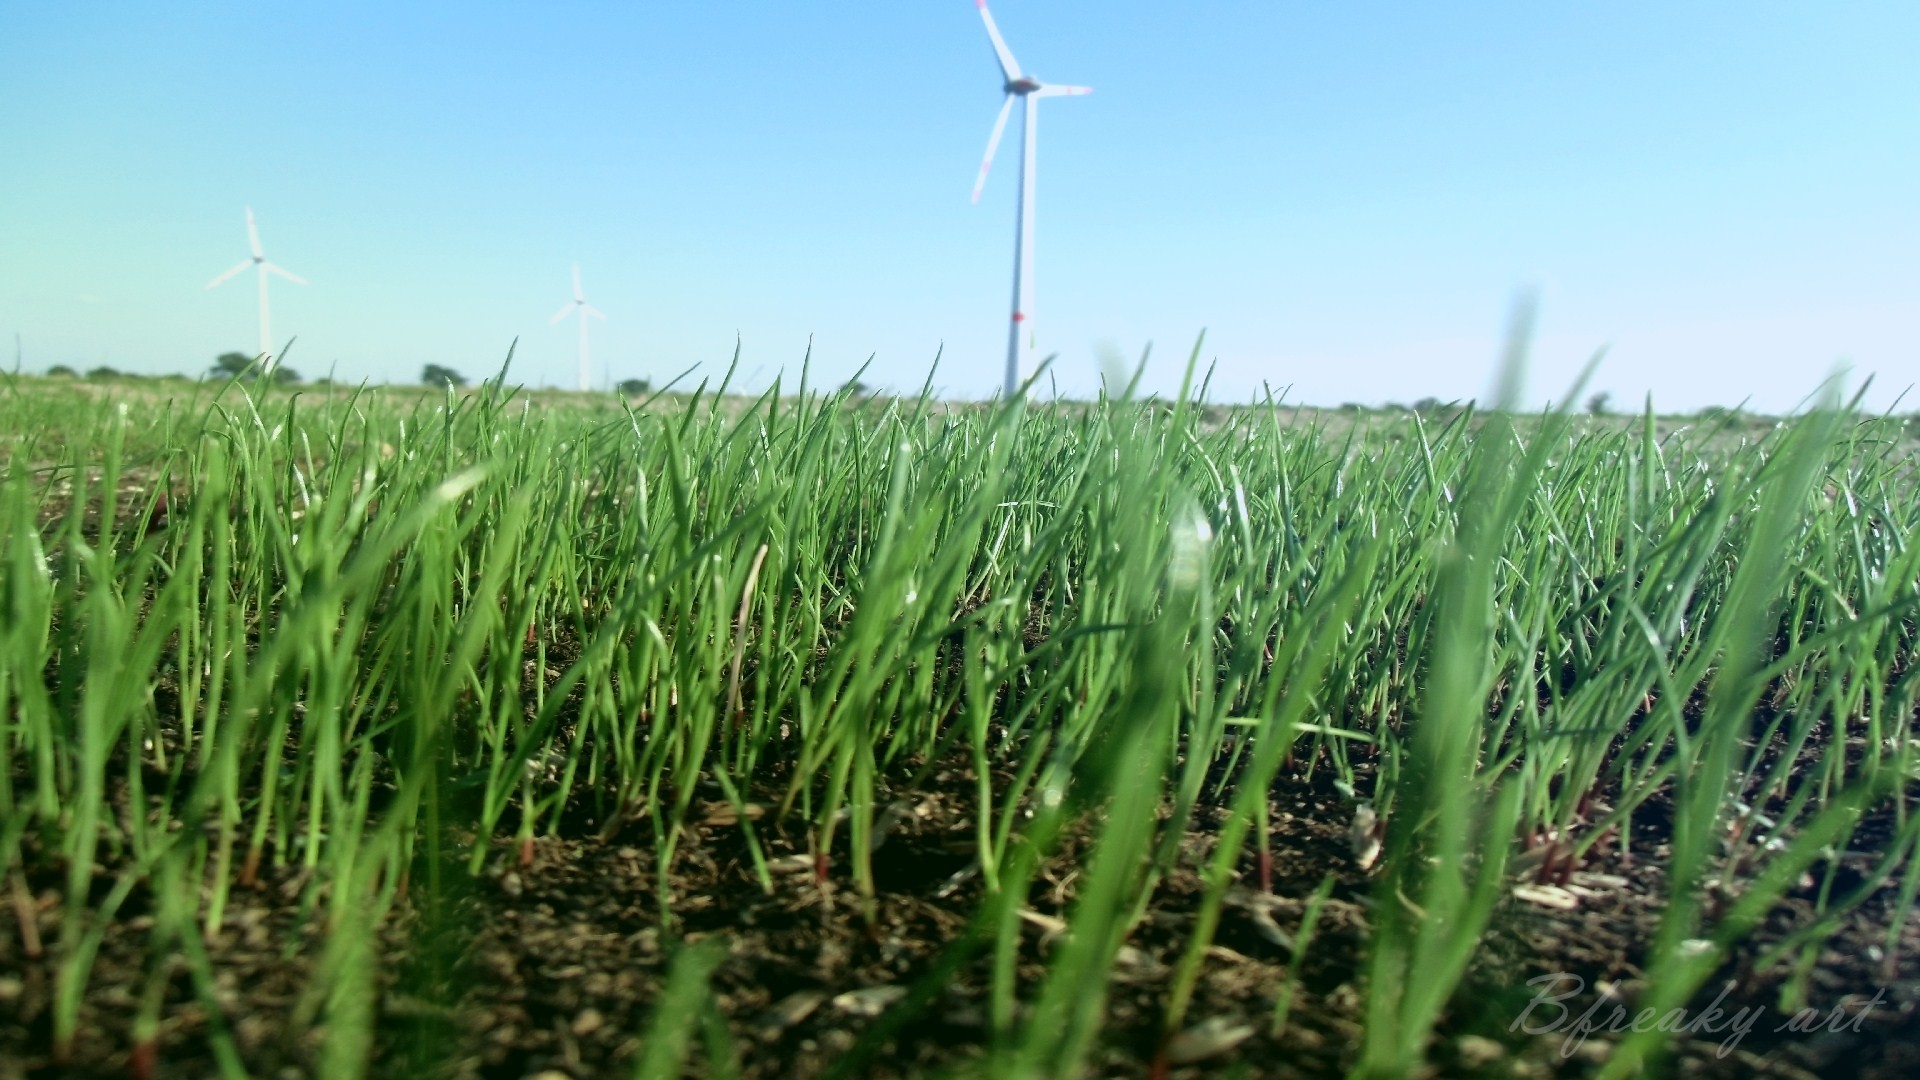 General 1920x1080 grass landscape Agro (Plants) plants field wind turbine